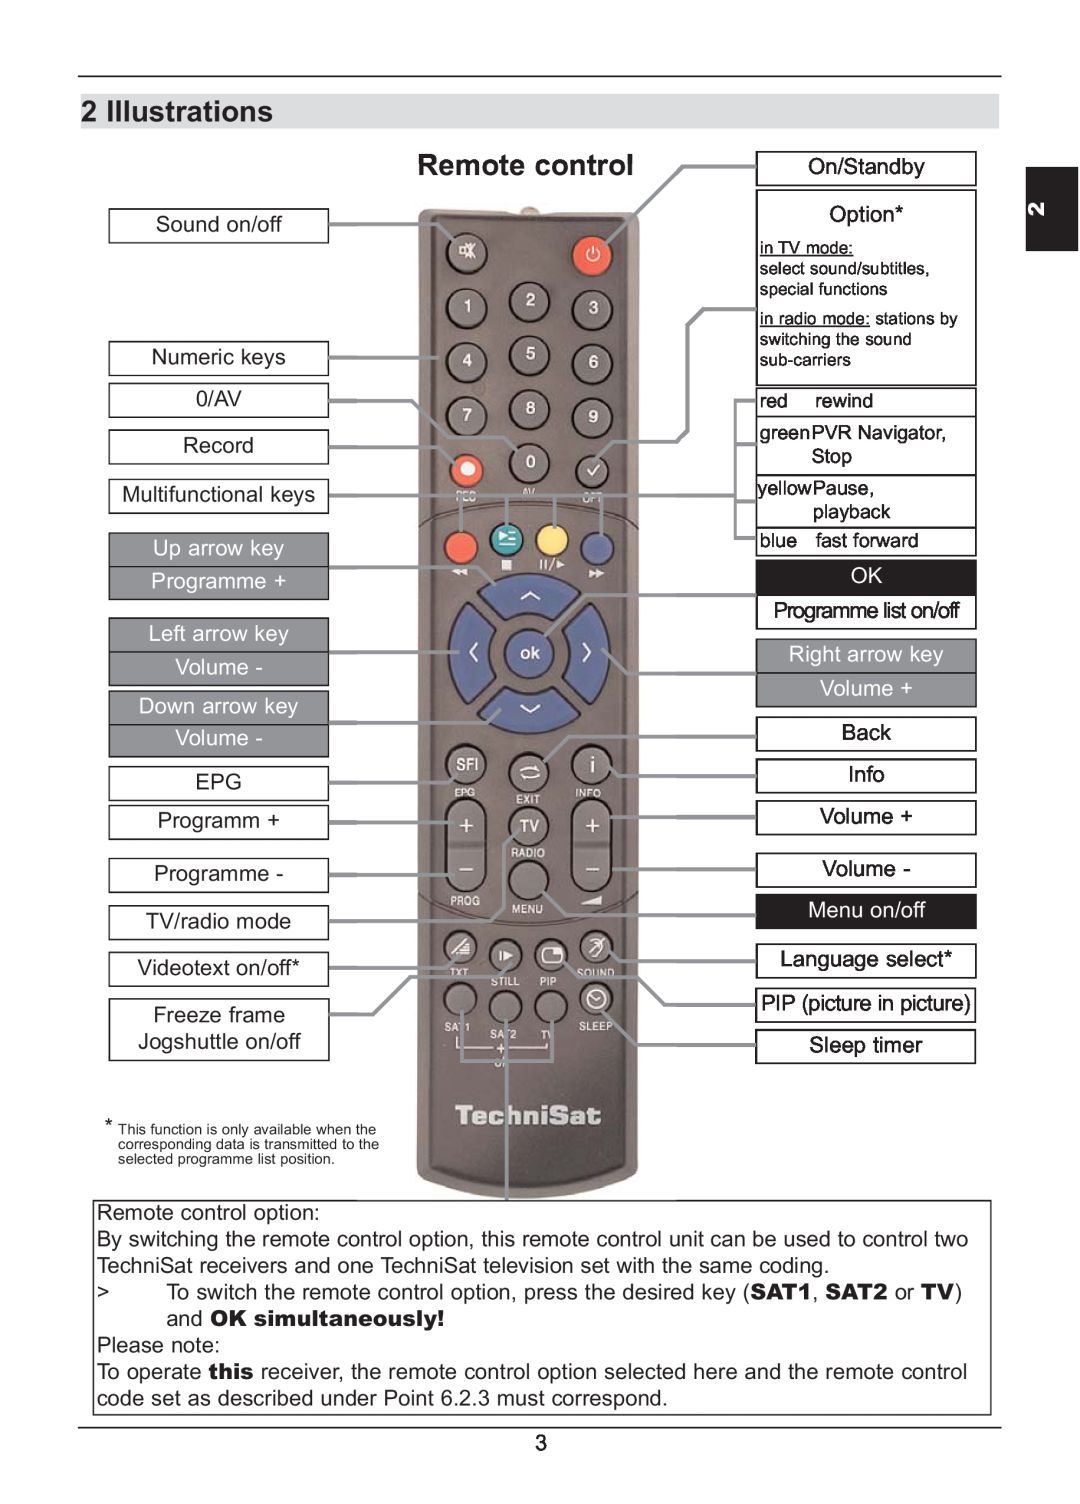 TechniSat HD S2X Illustrations, Remote control, Up arrow key Programme + Left arrow key Volume, Down arrow key Volume 